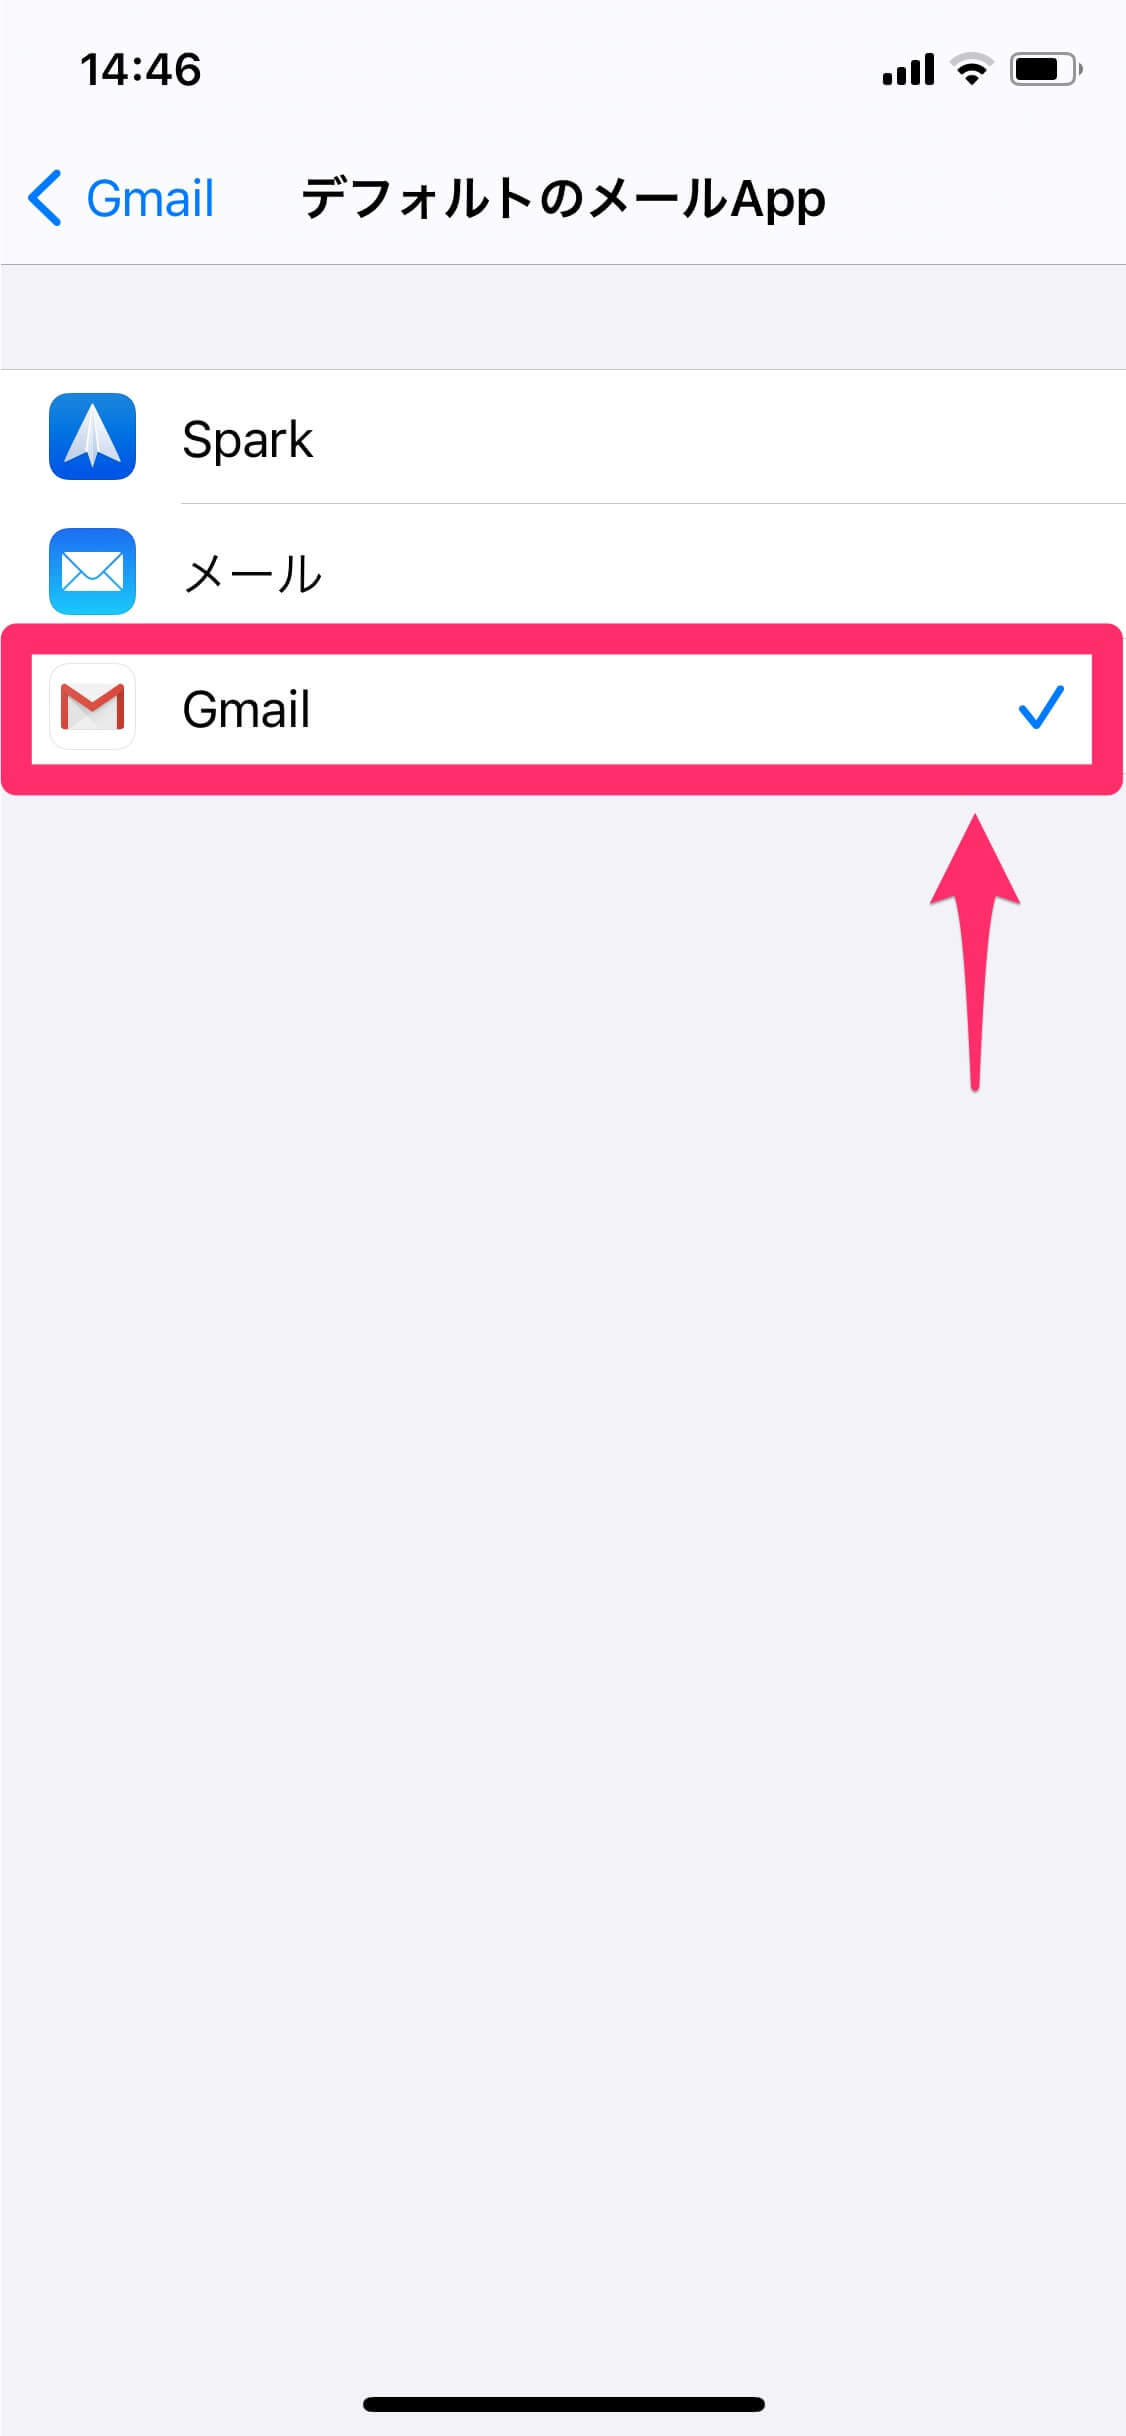 【iOS 14】デフォルトのブラウザー/メールアプリを変更する方法。Chrome/Gmailを常に使える